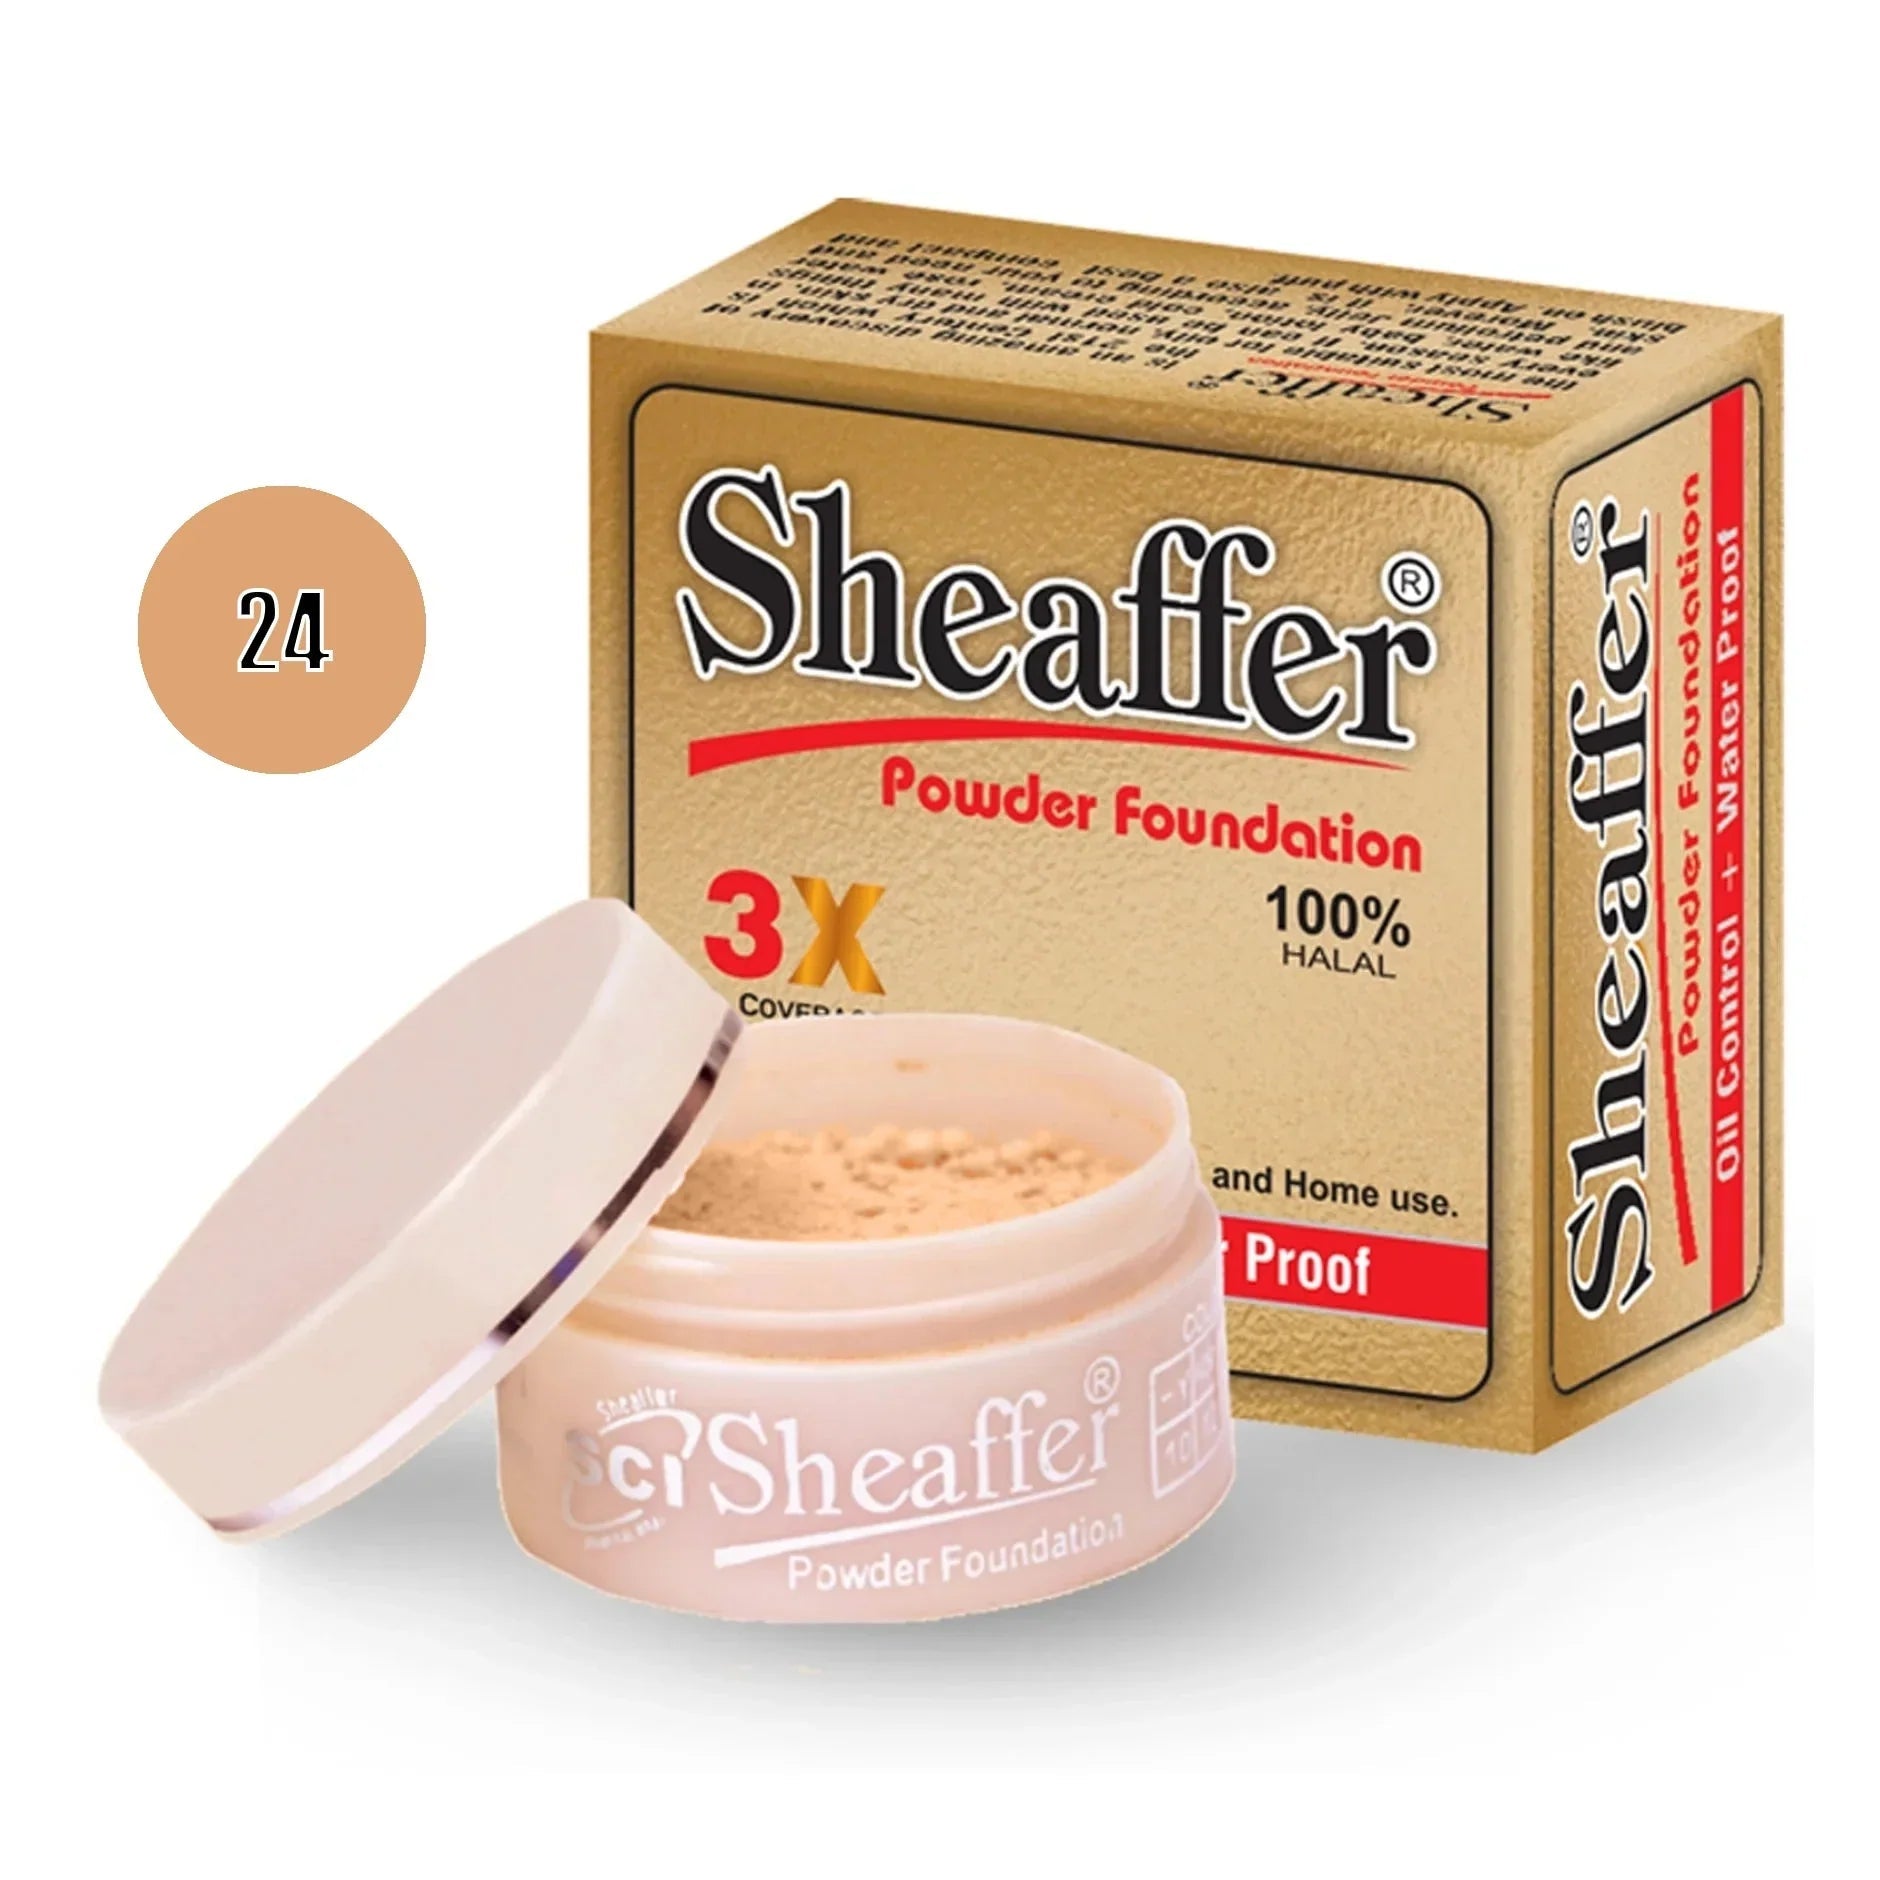 Sheaffer Powder Foundation Base P1 Shade - Retailershop - Online Shopping Center